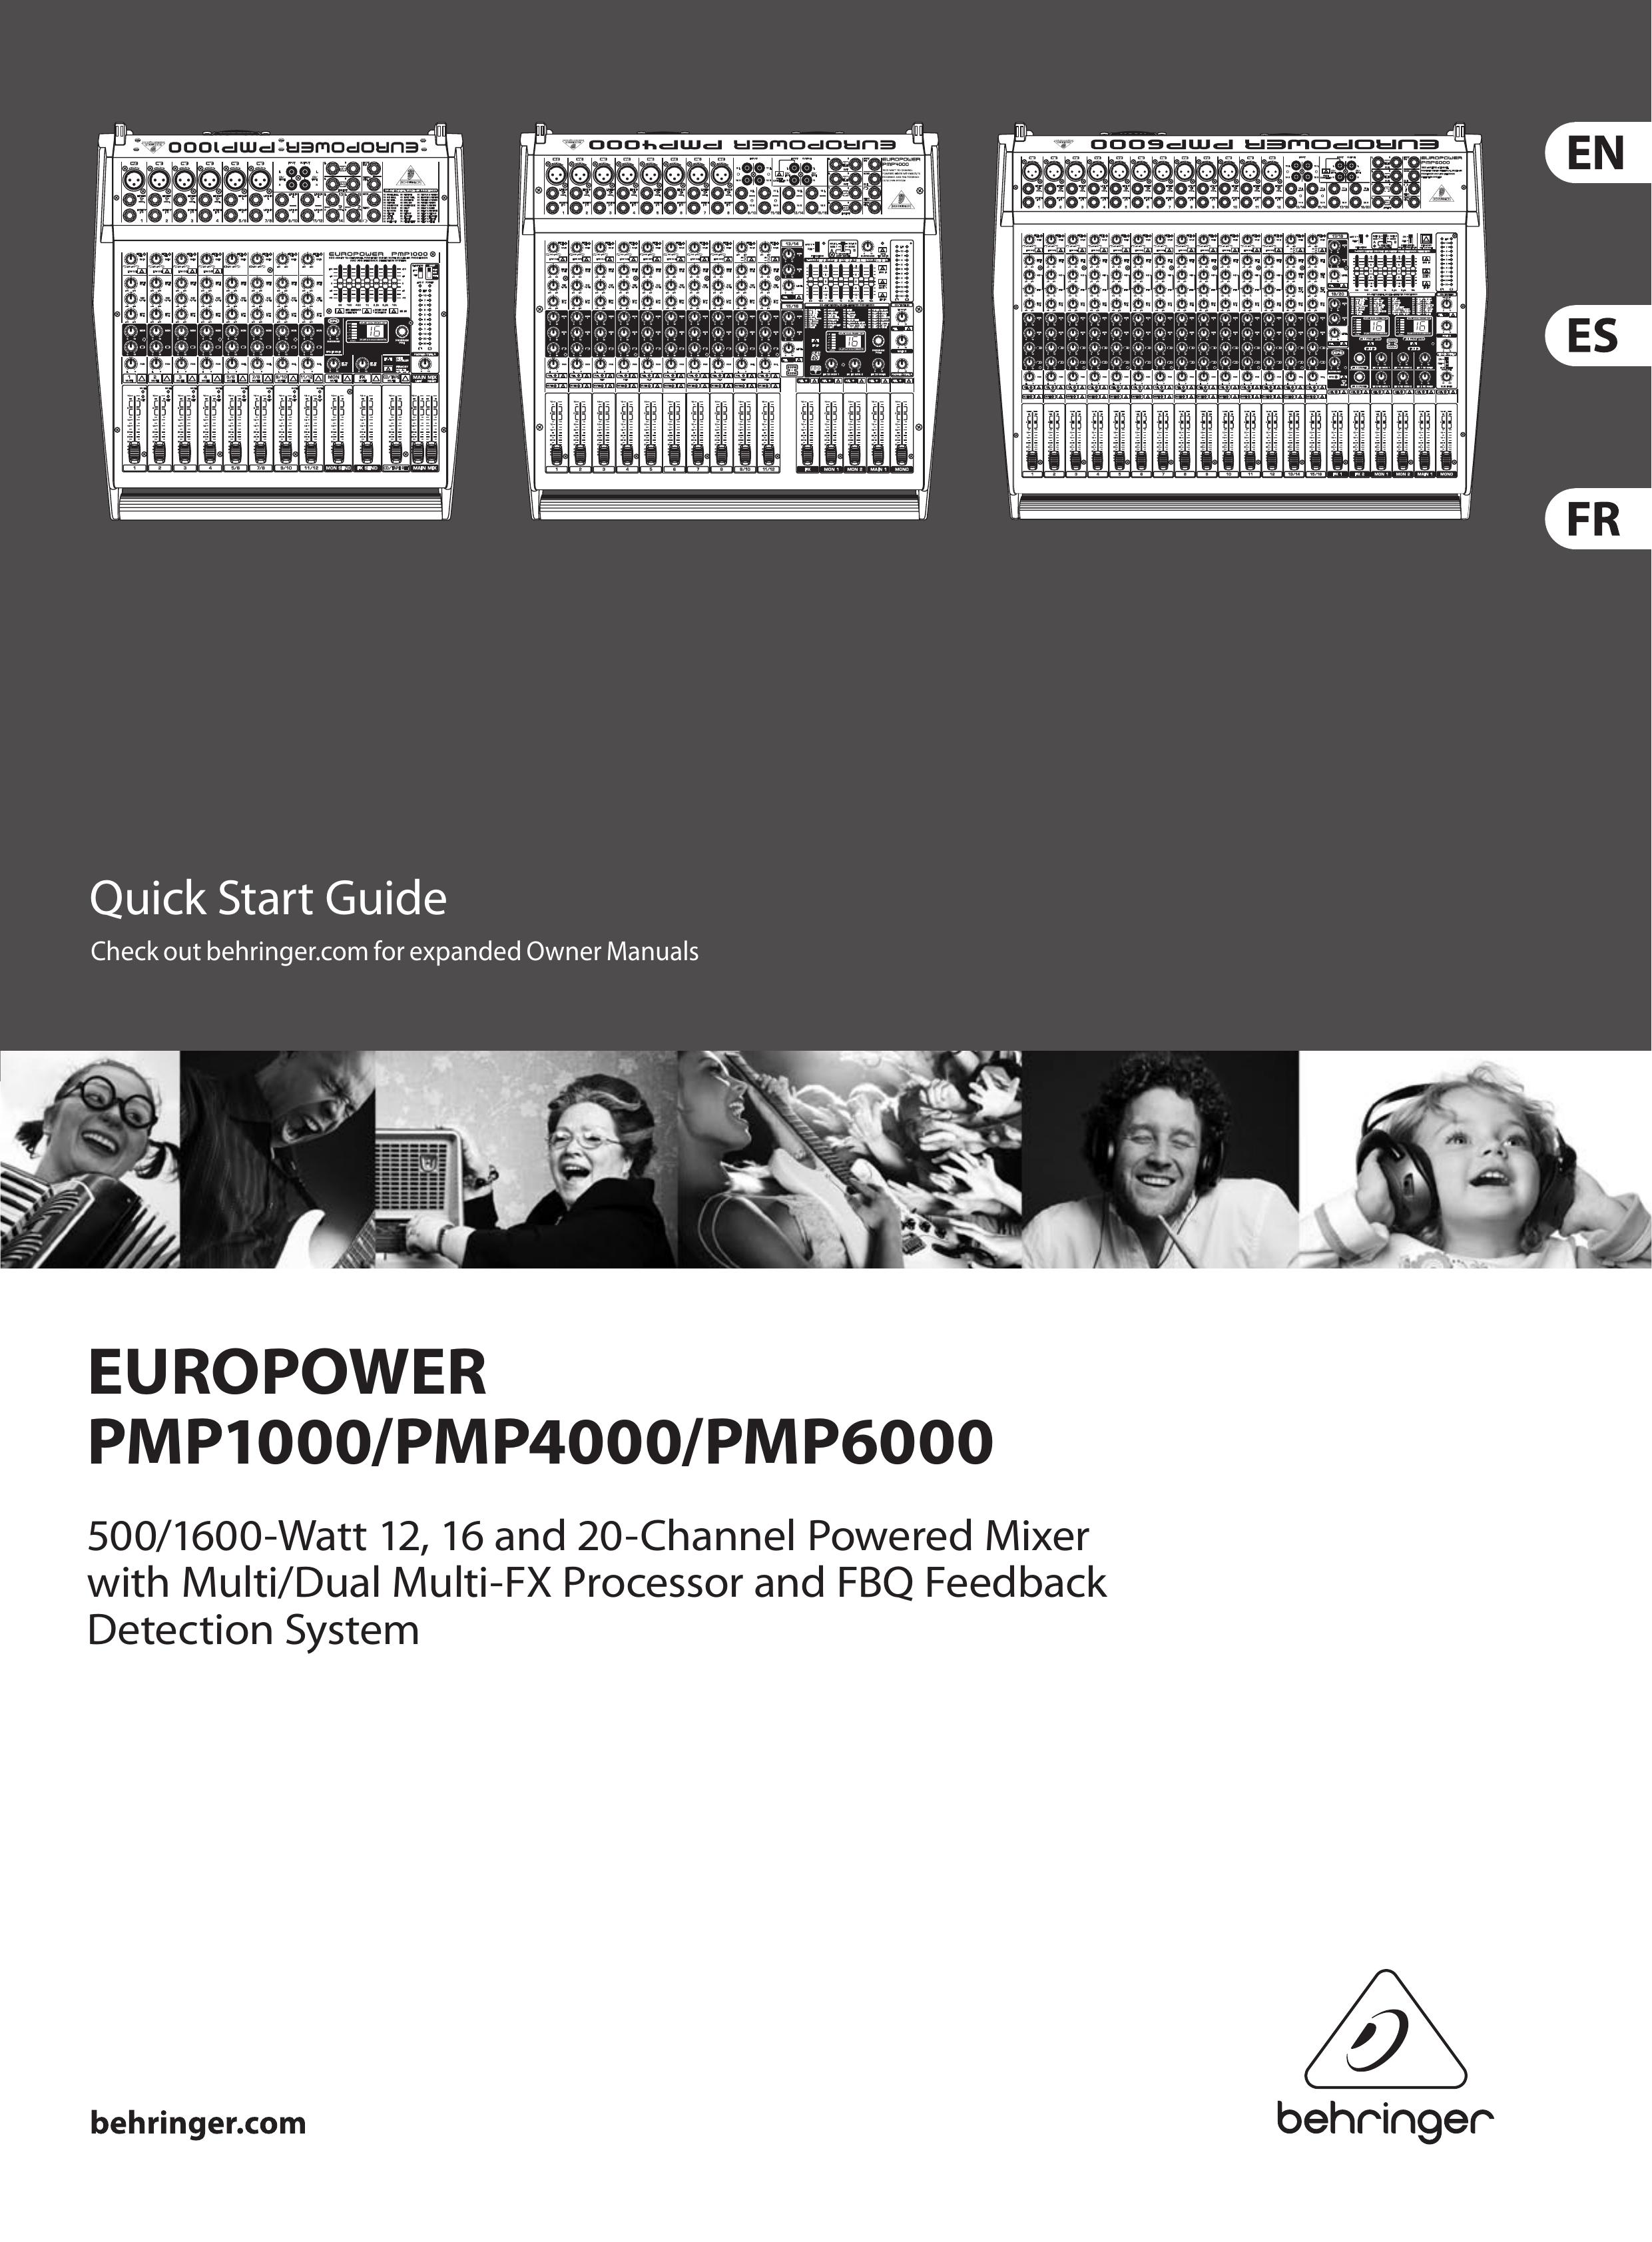 Behringer PMP4000 Music Mixer User Manual